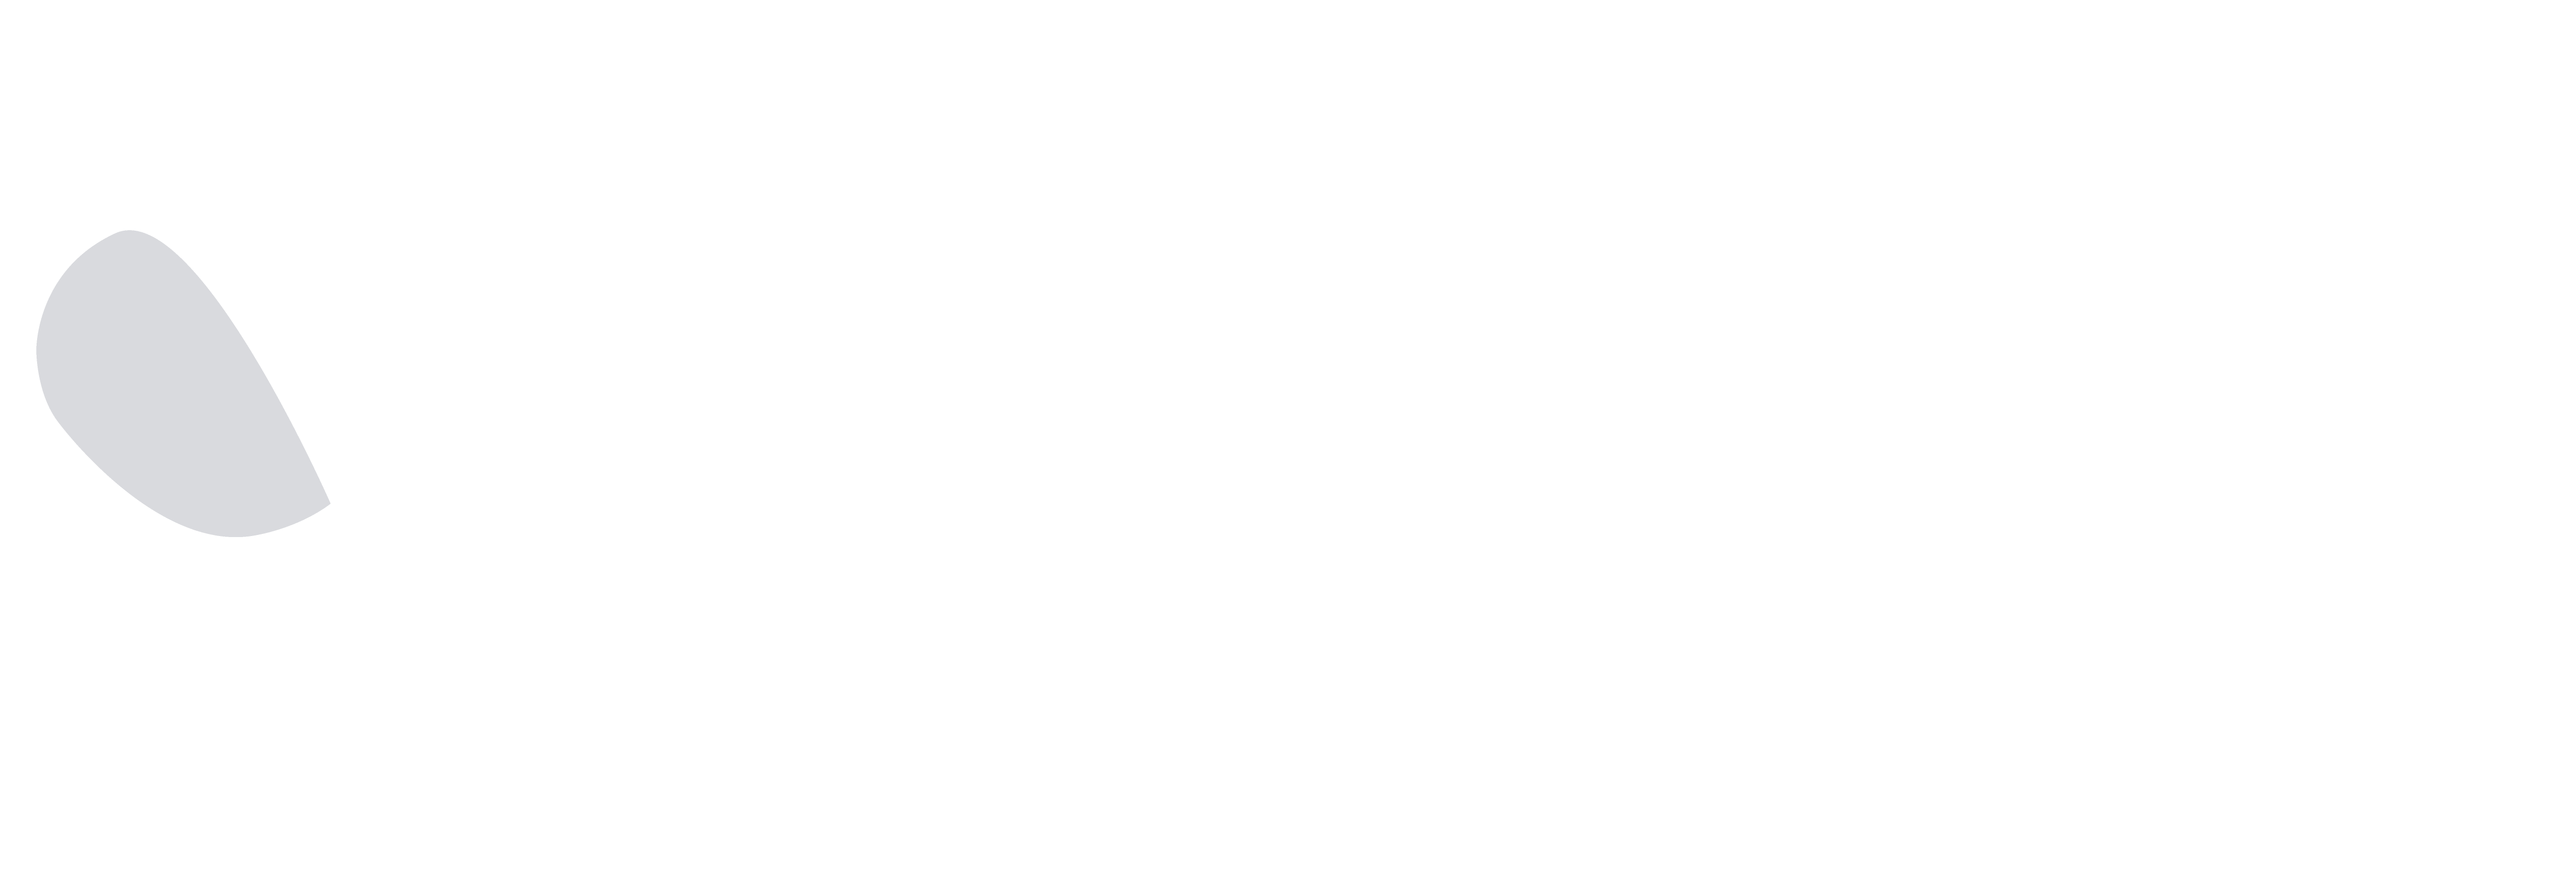 Vallevision HD